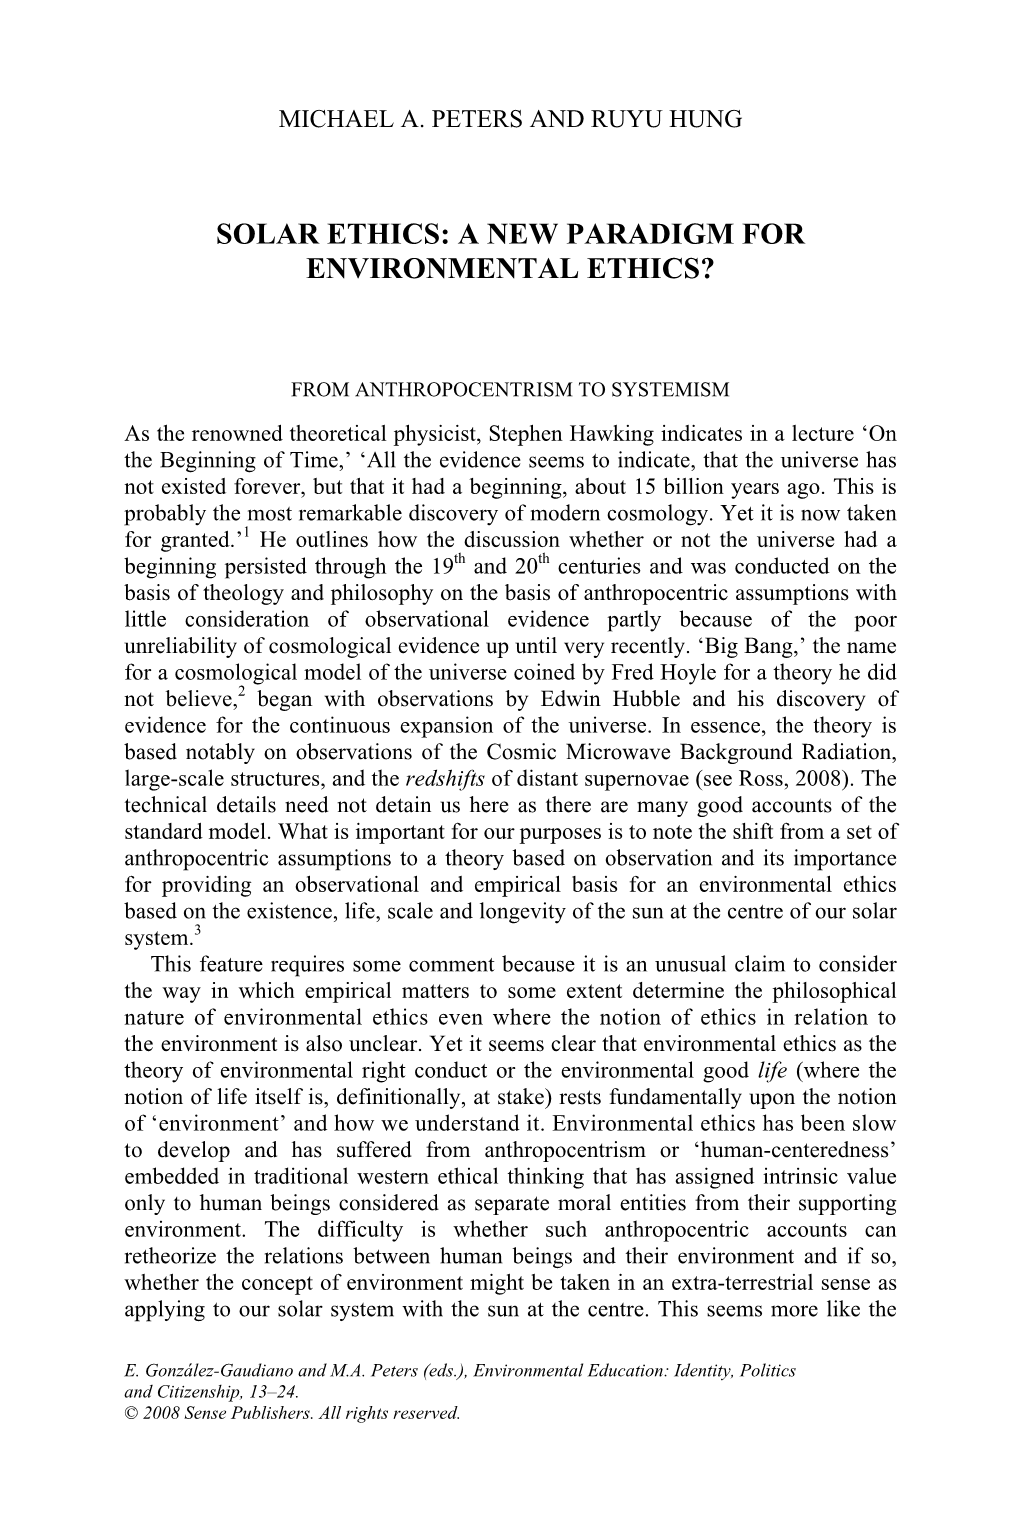 A New Paradigm for Environmental Ethics?